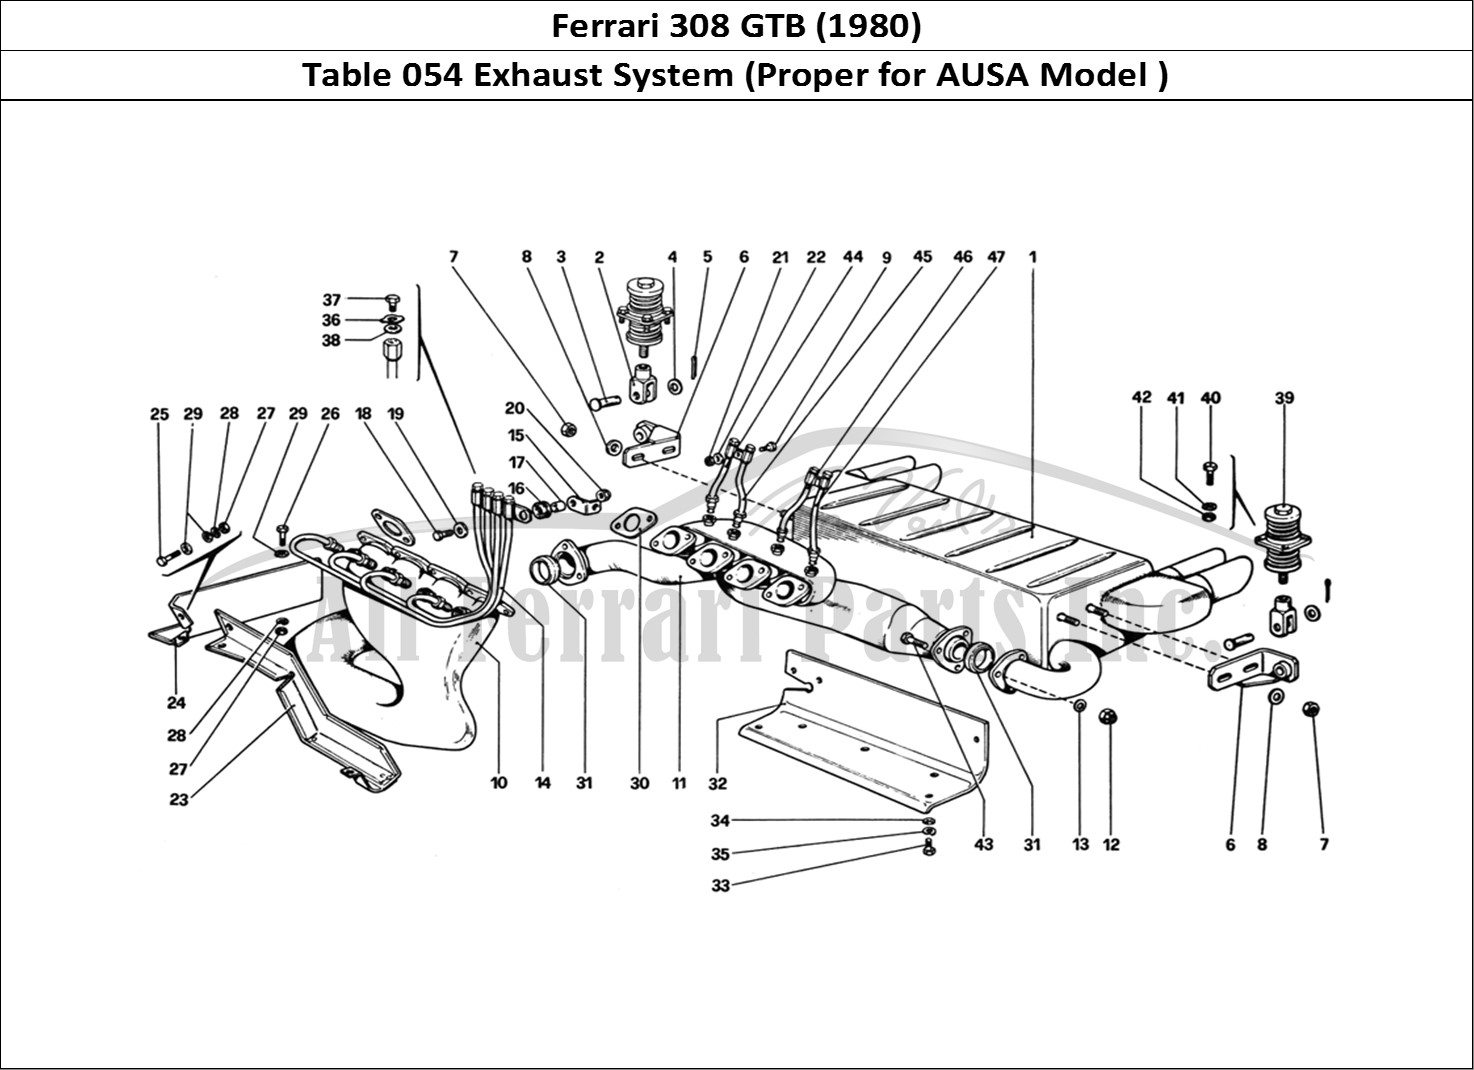 Ferrari Parts Ferrari 308 GTB (1980) Page 054 Exhaust System (Variants